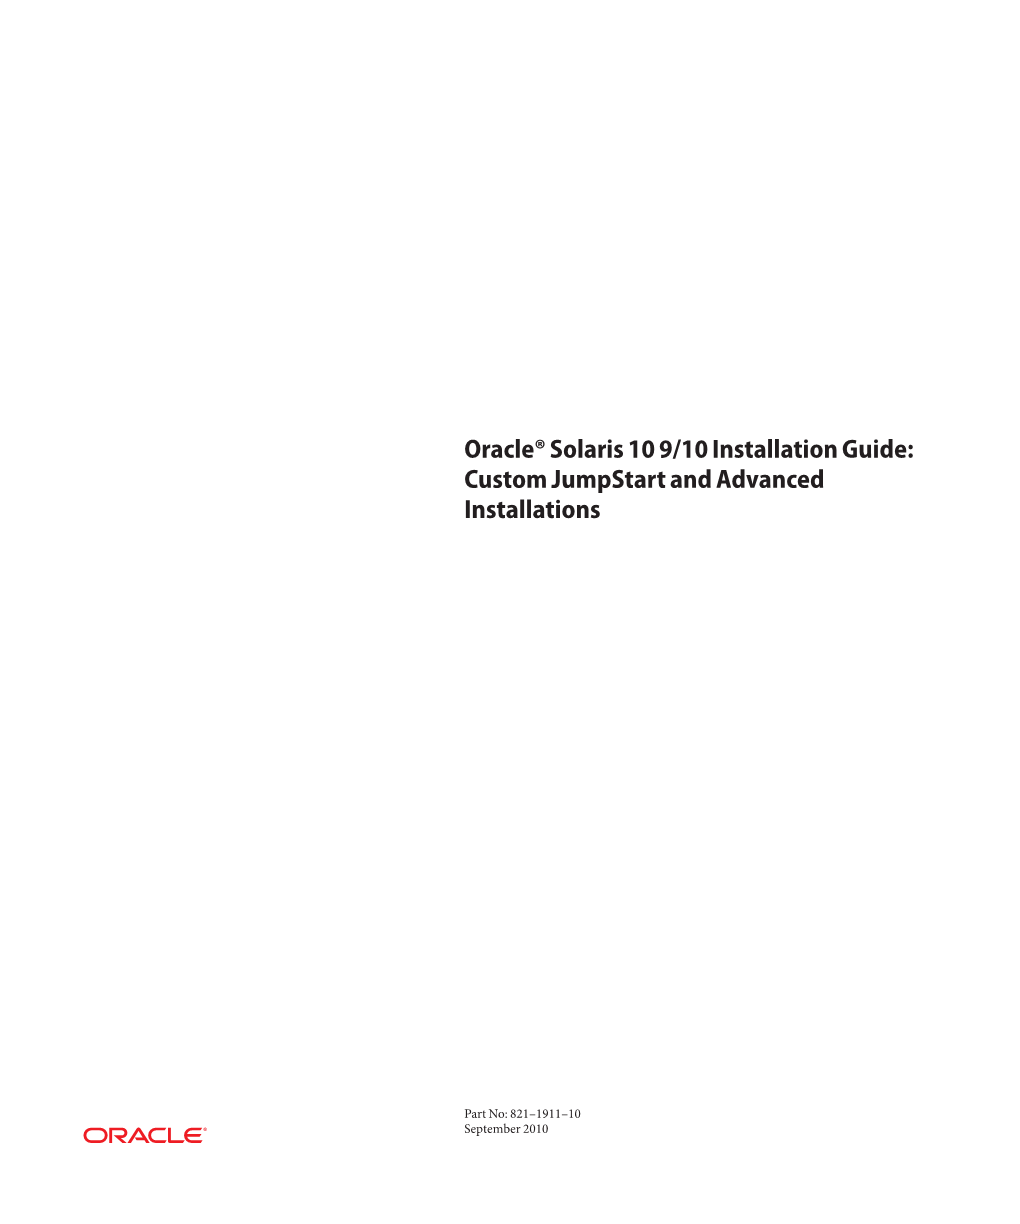 Oracle Solaris 10 910 Installation Guide Custom Jumpstart and Advanced Installations